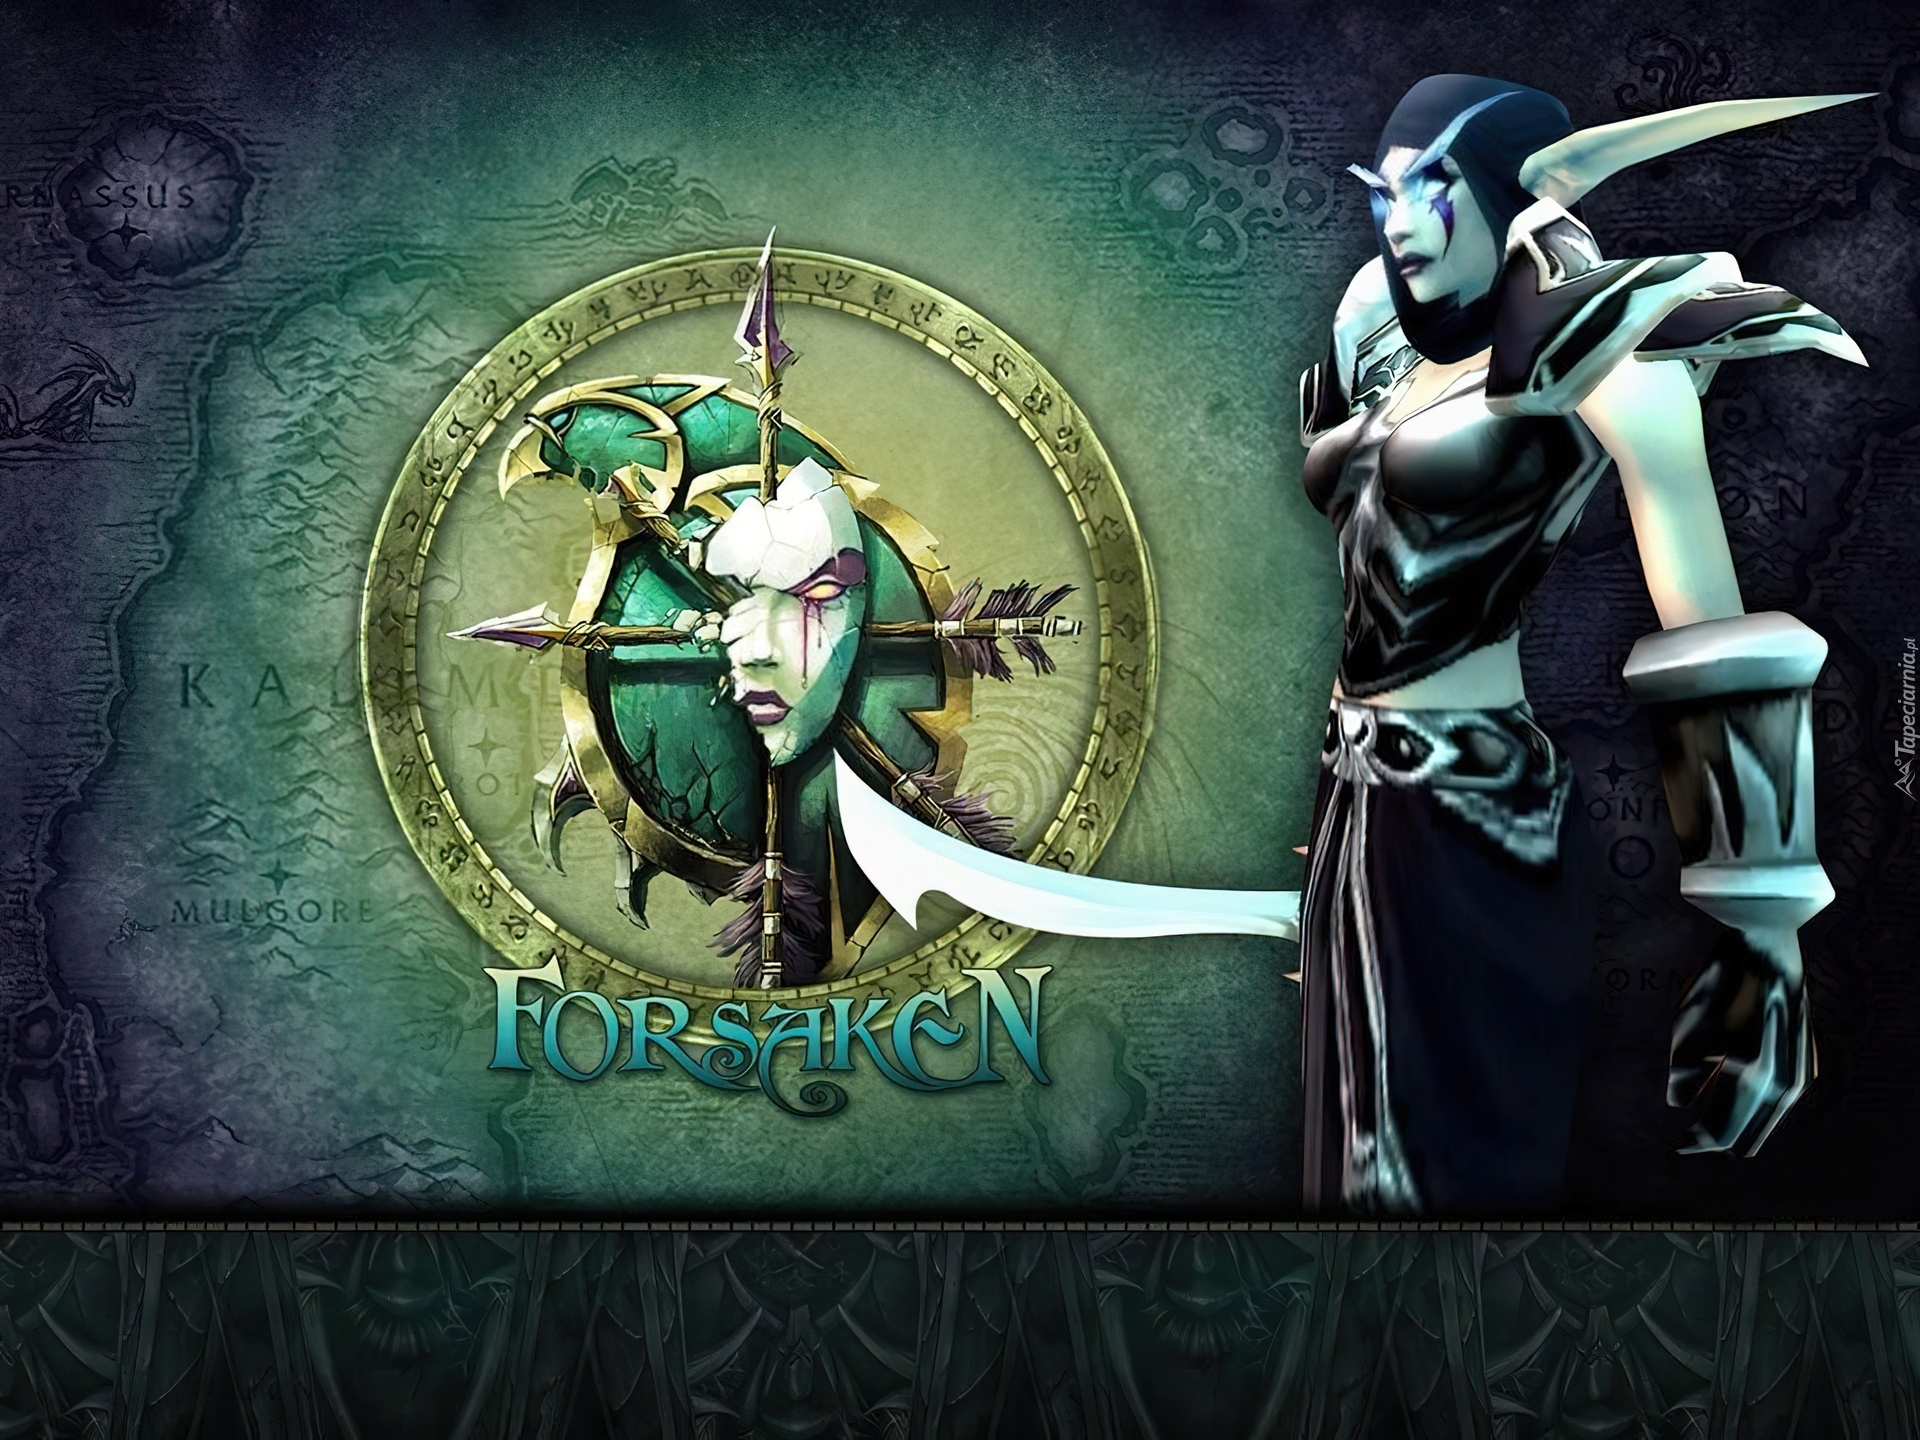 World Of Warcraft, kobieta, elf, fantasy